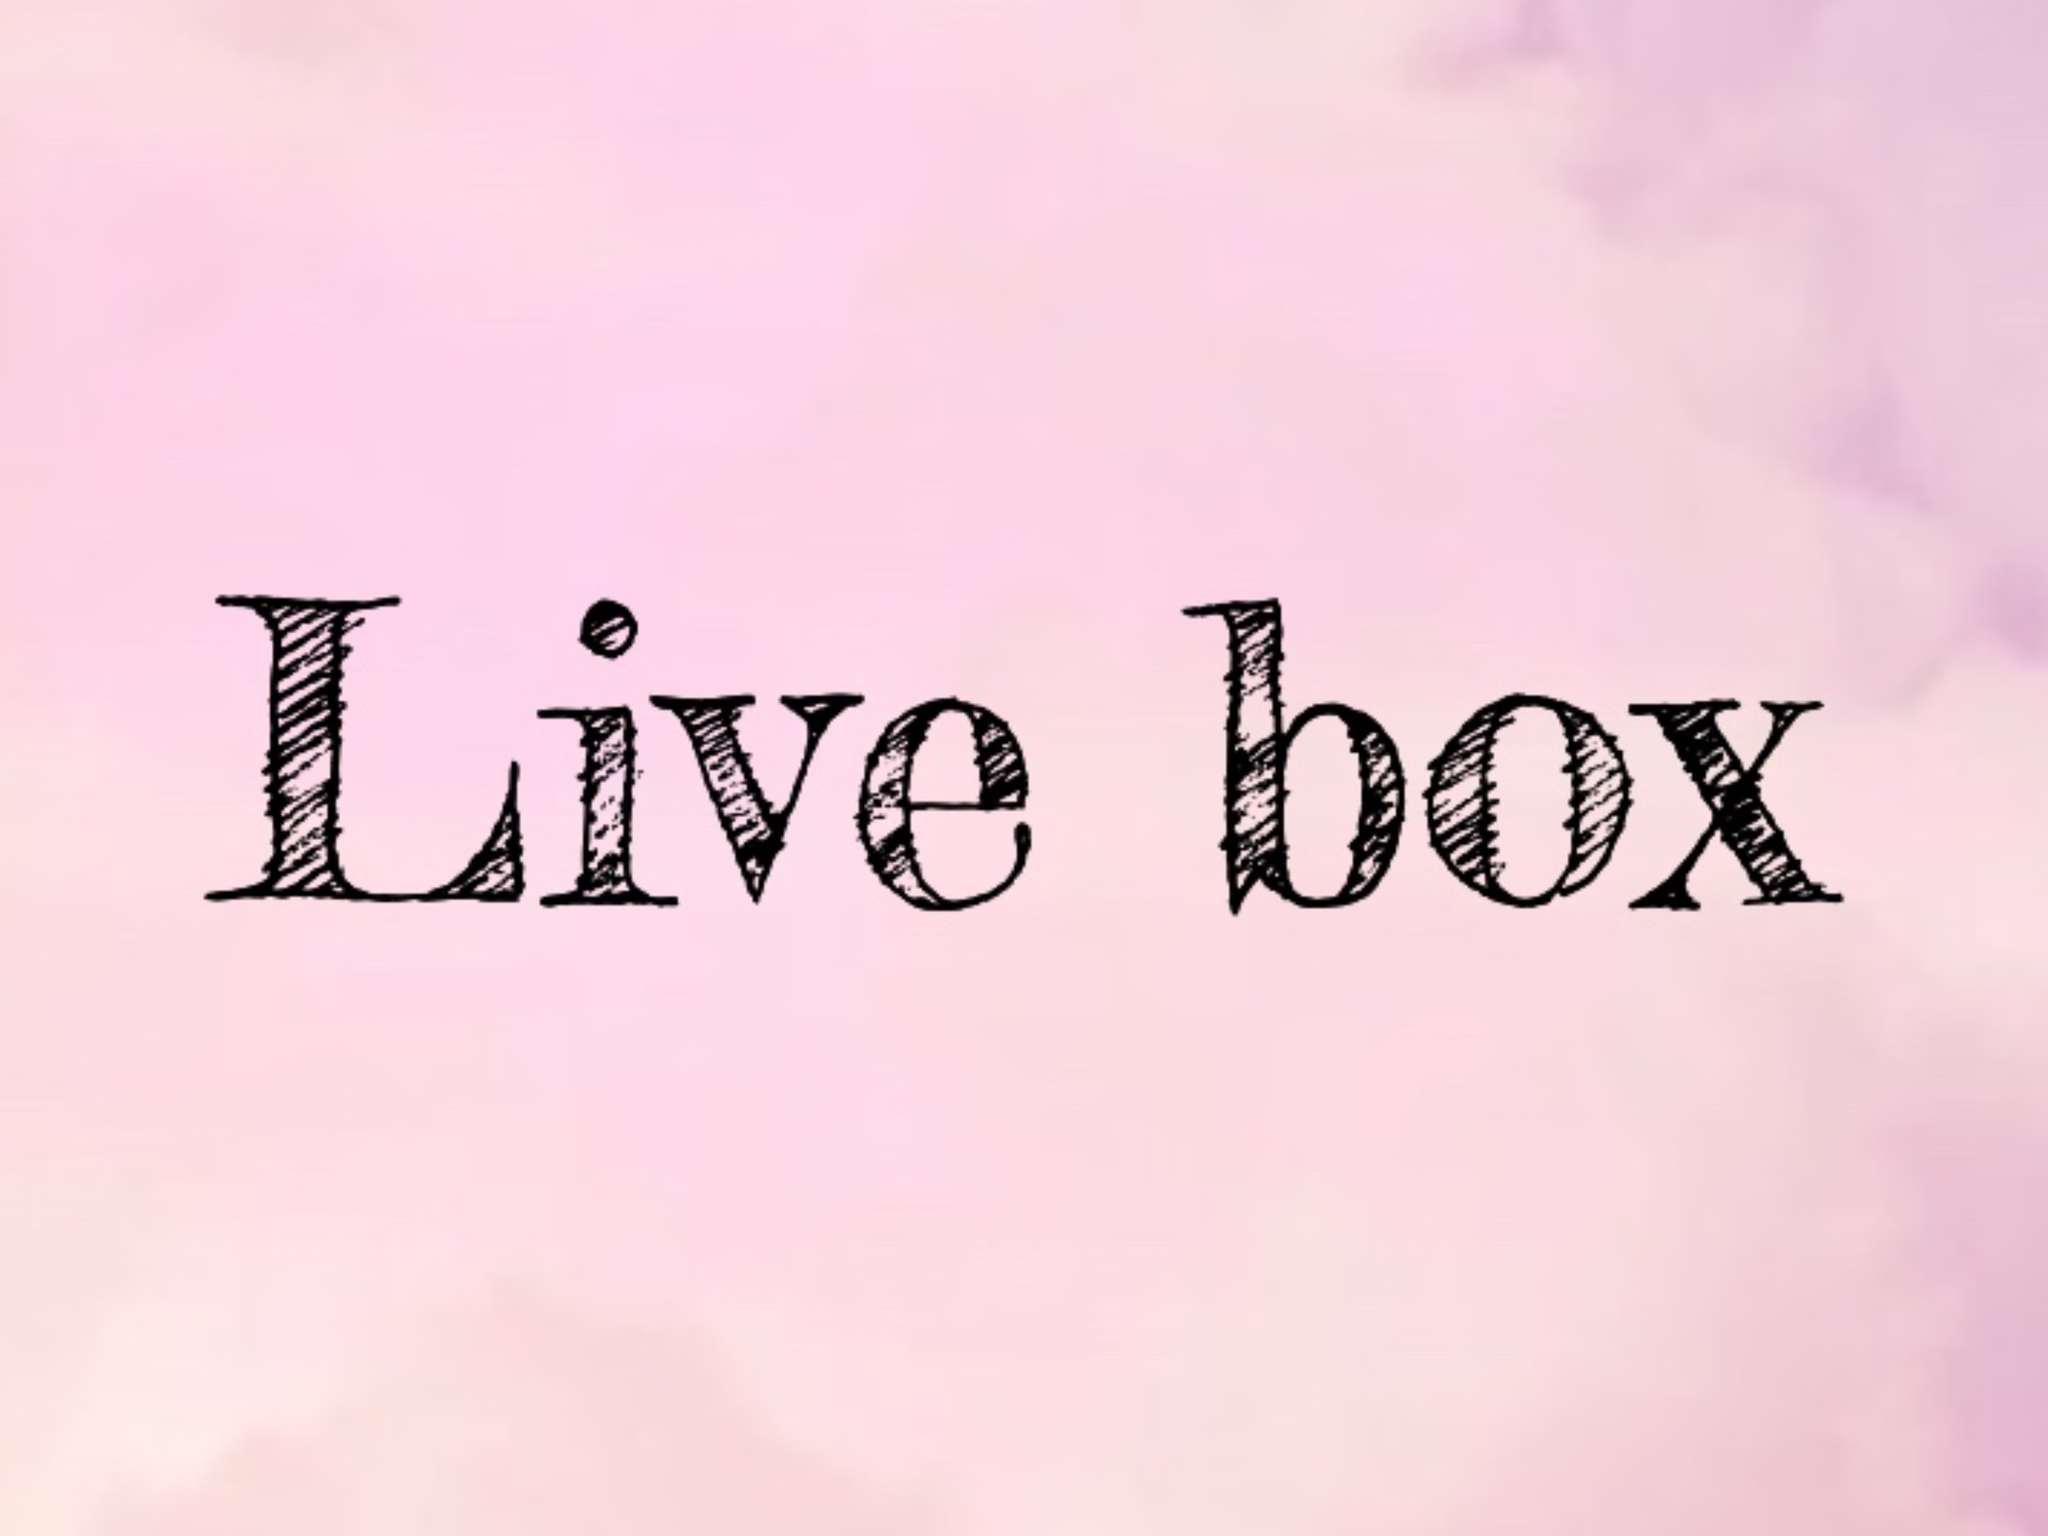 Live box #2